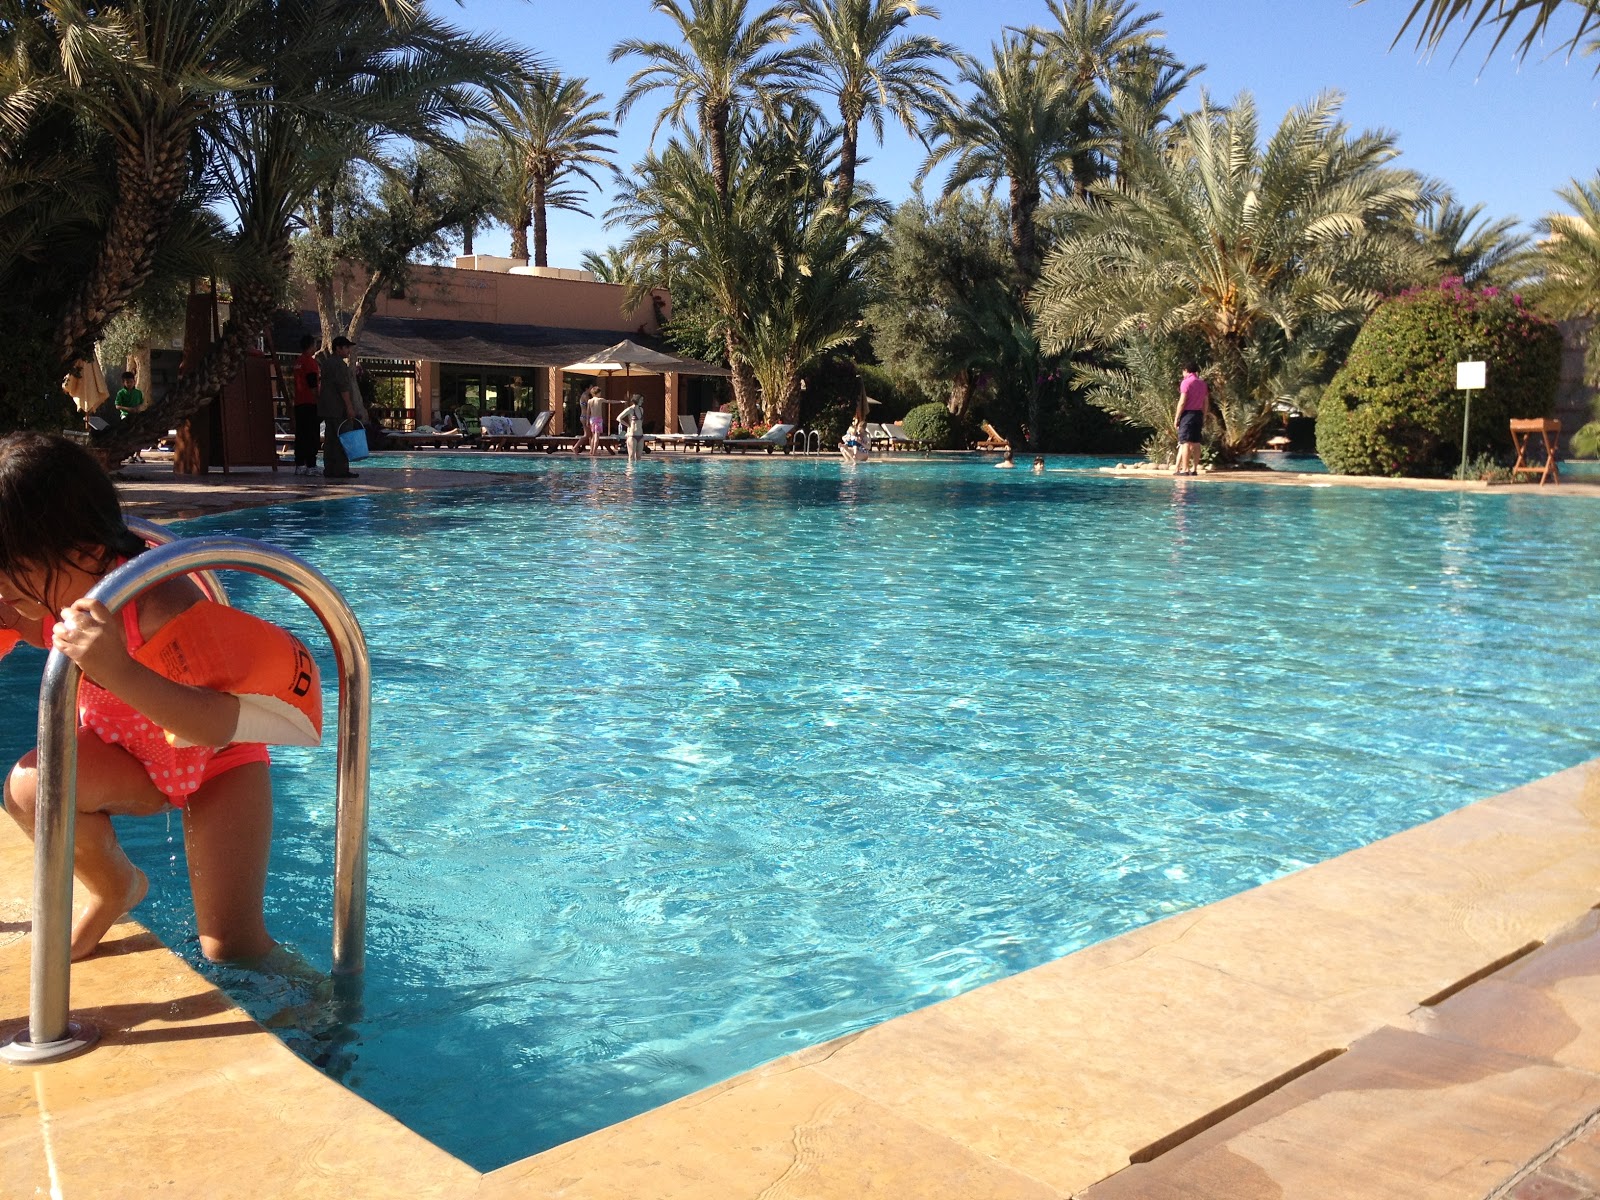 Club+Med+Marrakech+R+a%25CC%2580+la+piscine.JPG